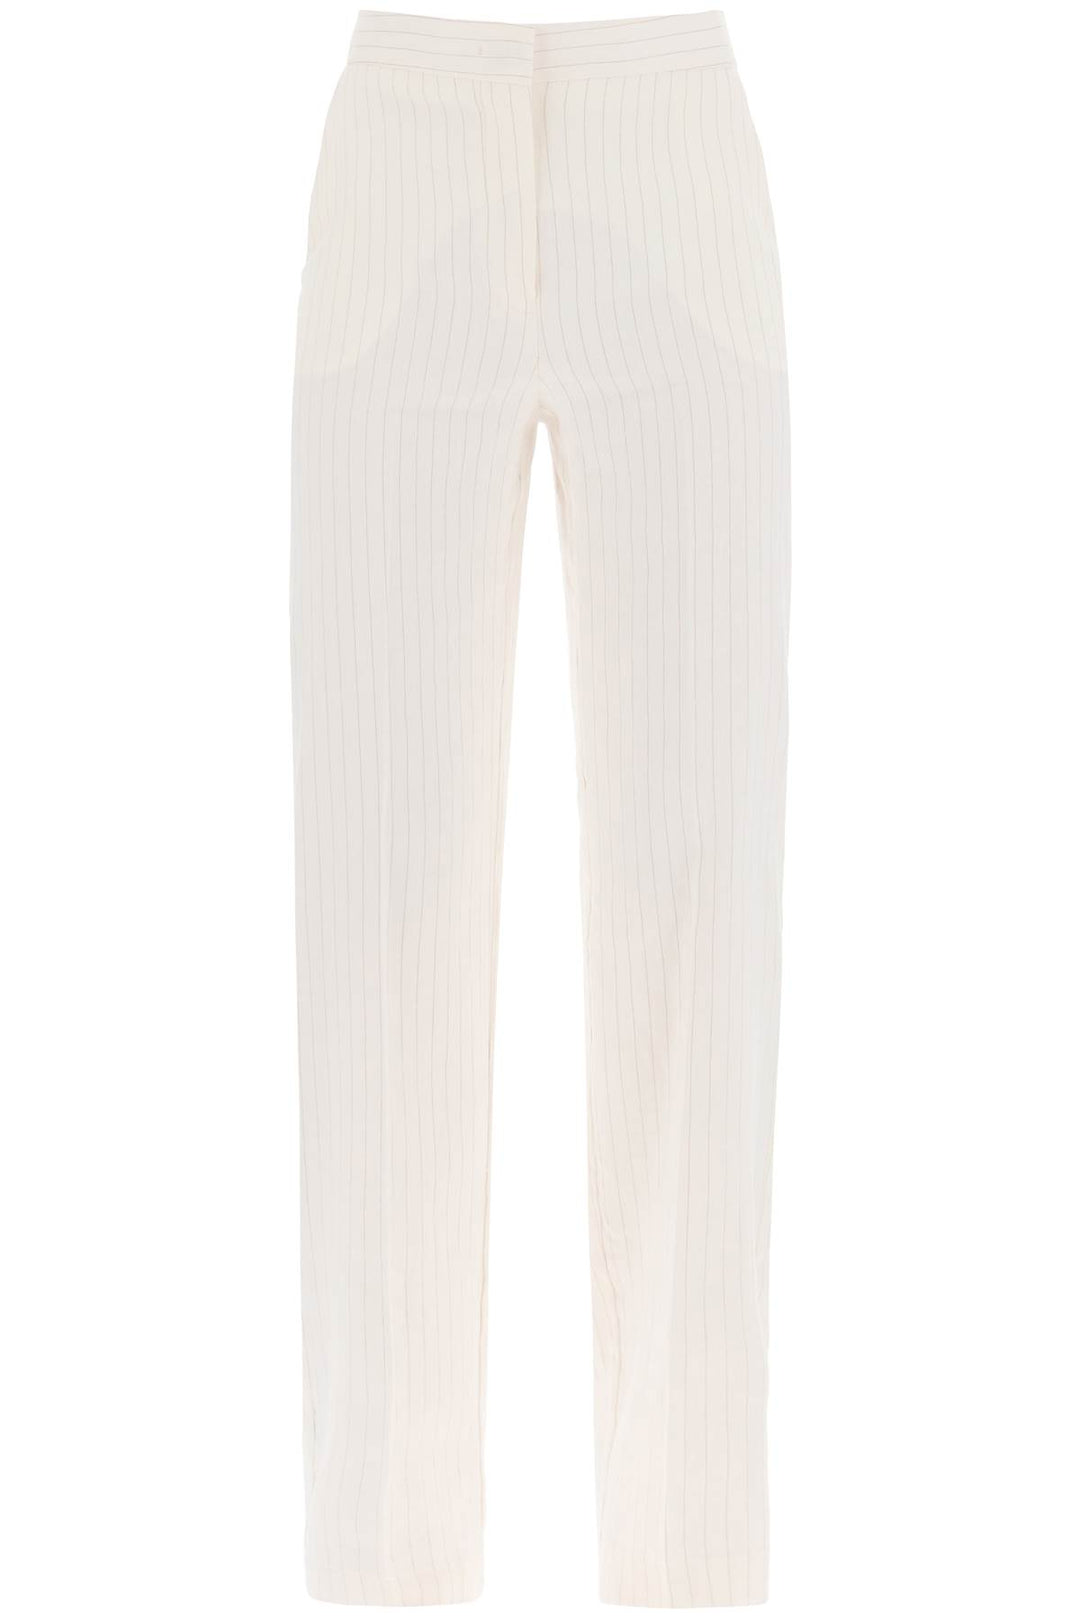 Mvp Wardrobe Striped Monaco Pants   Bianco